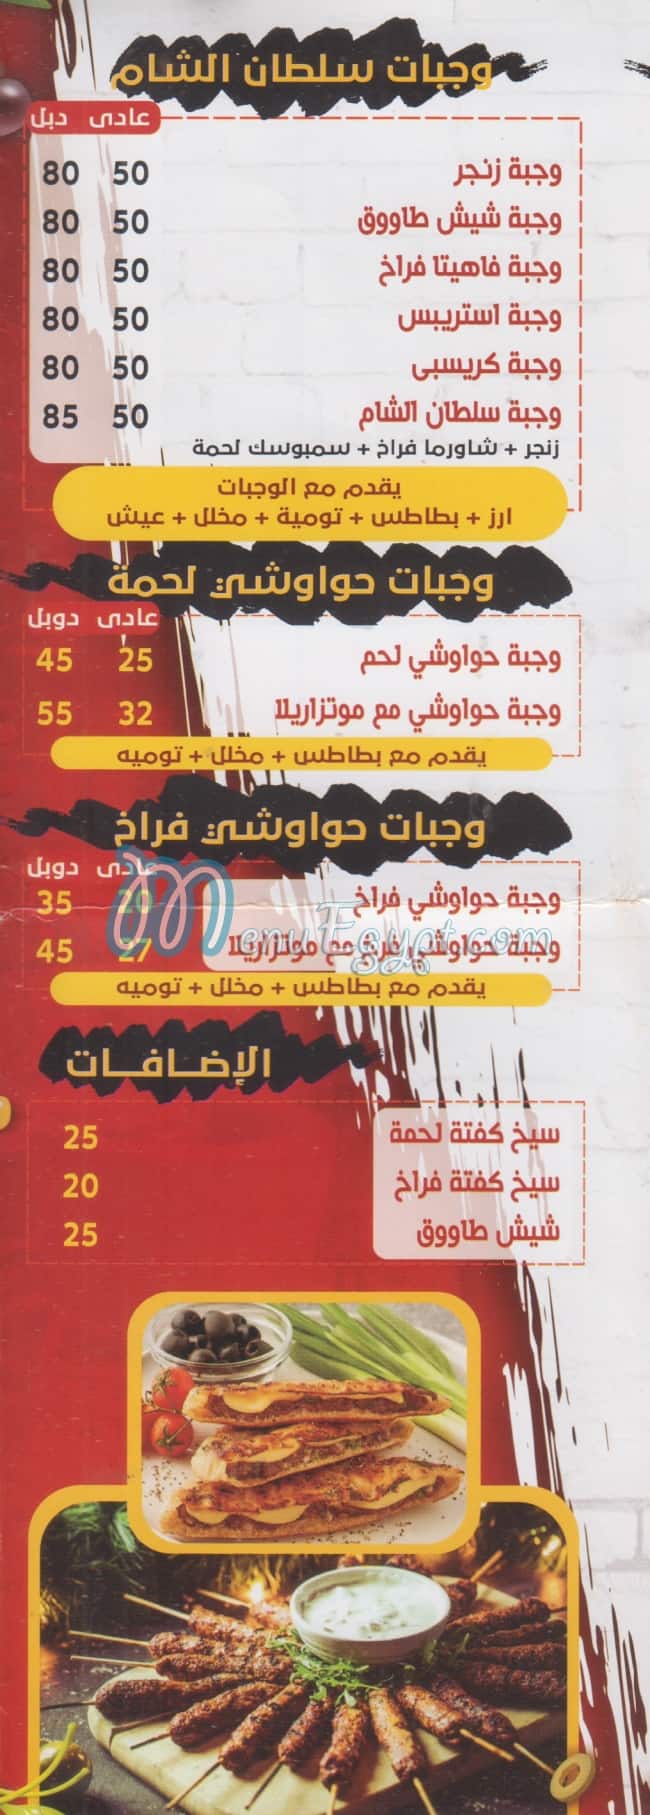 Soltan El sham Fesal menu Egypt 1